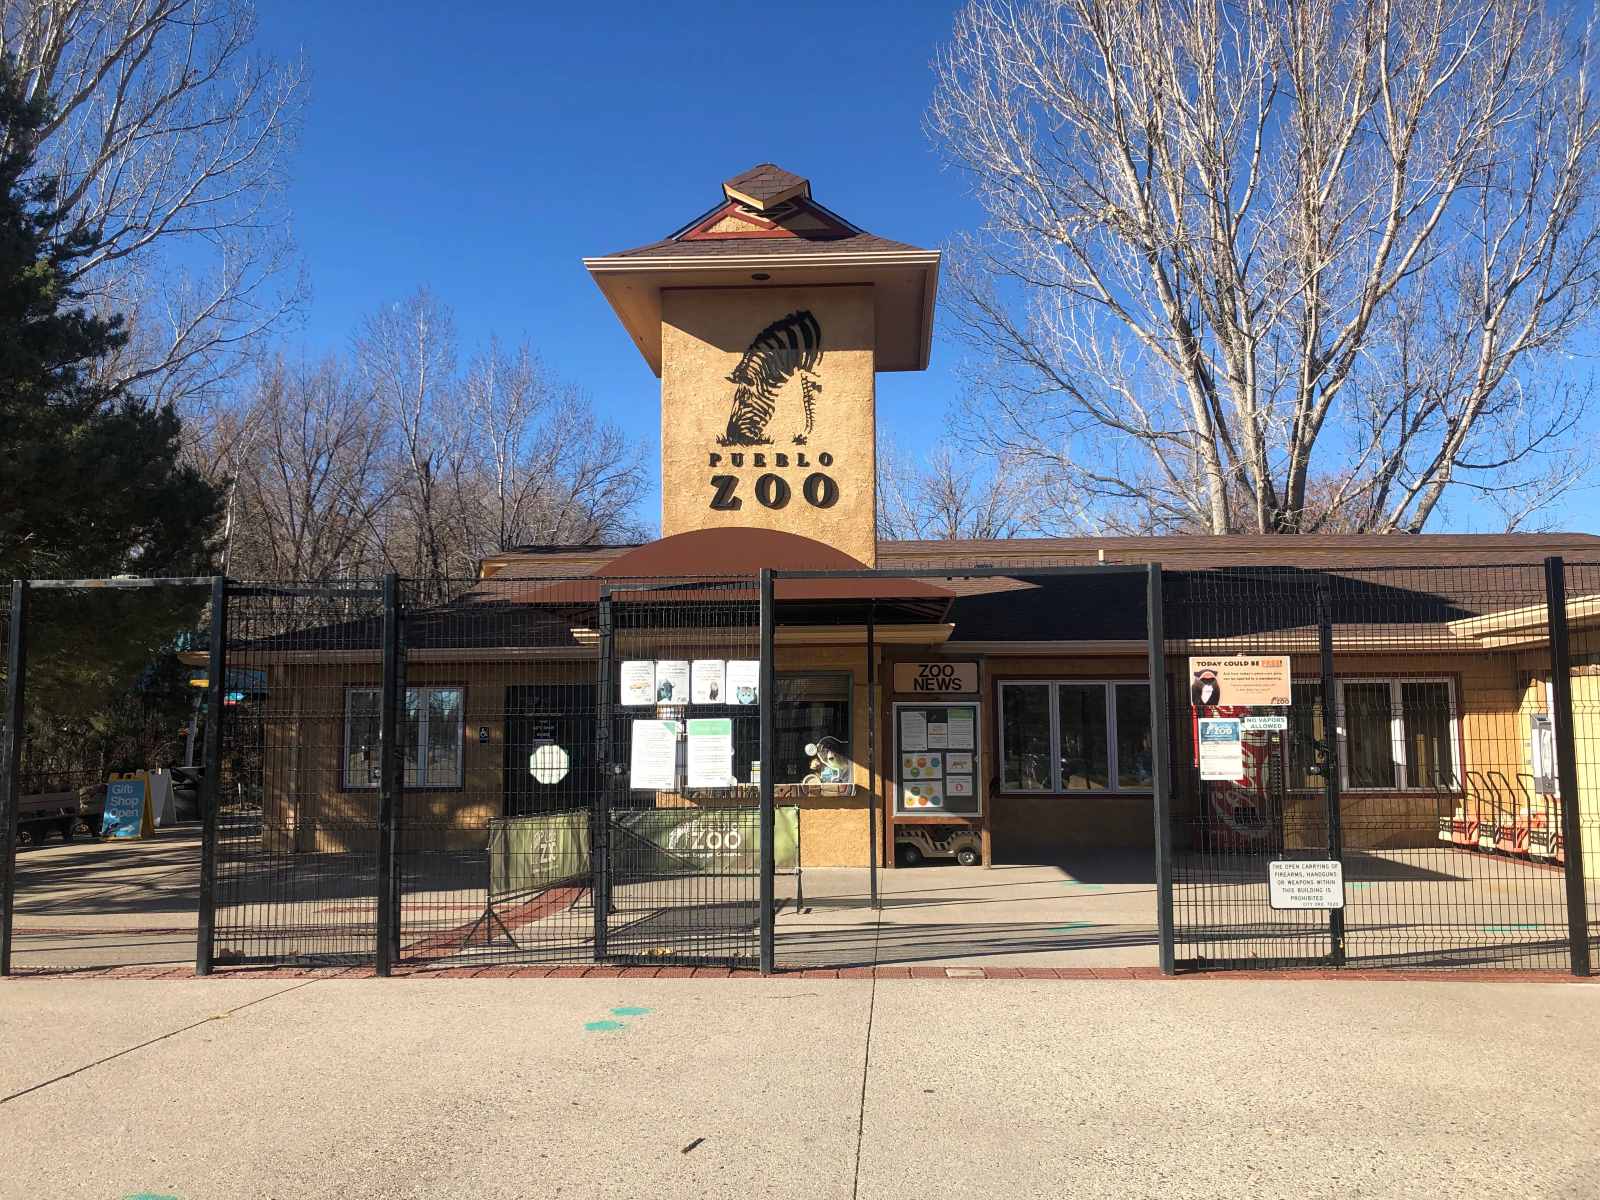 18-captivating-facts-about-pueblo-zoo